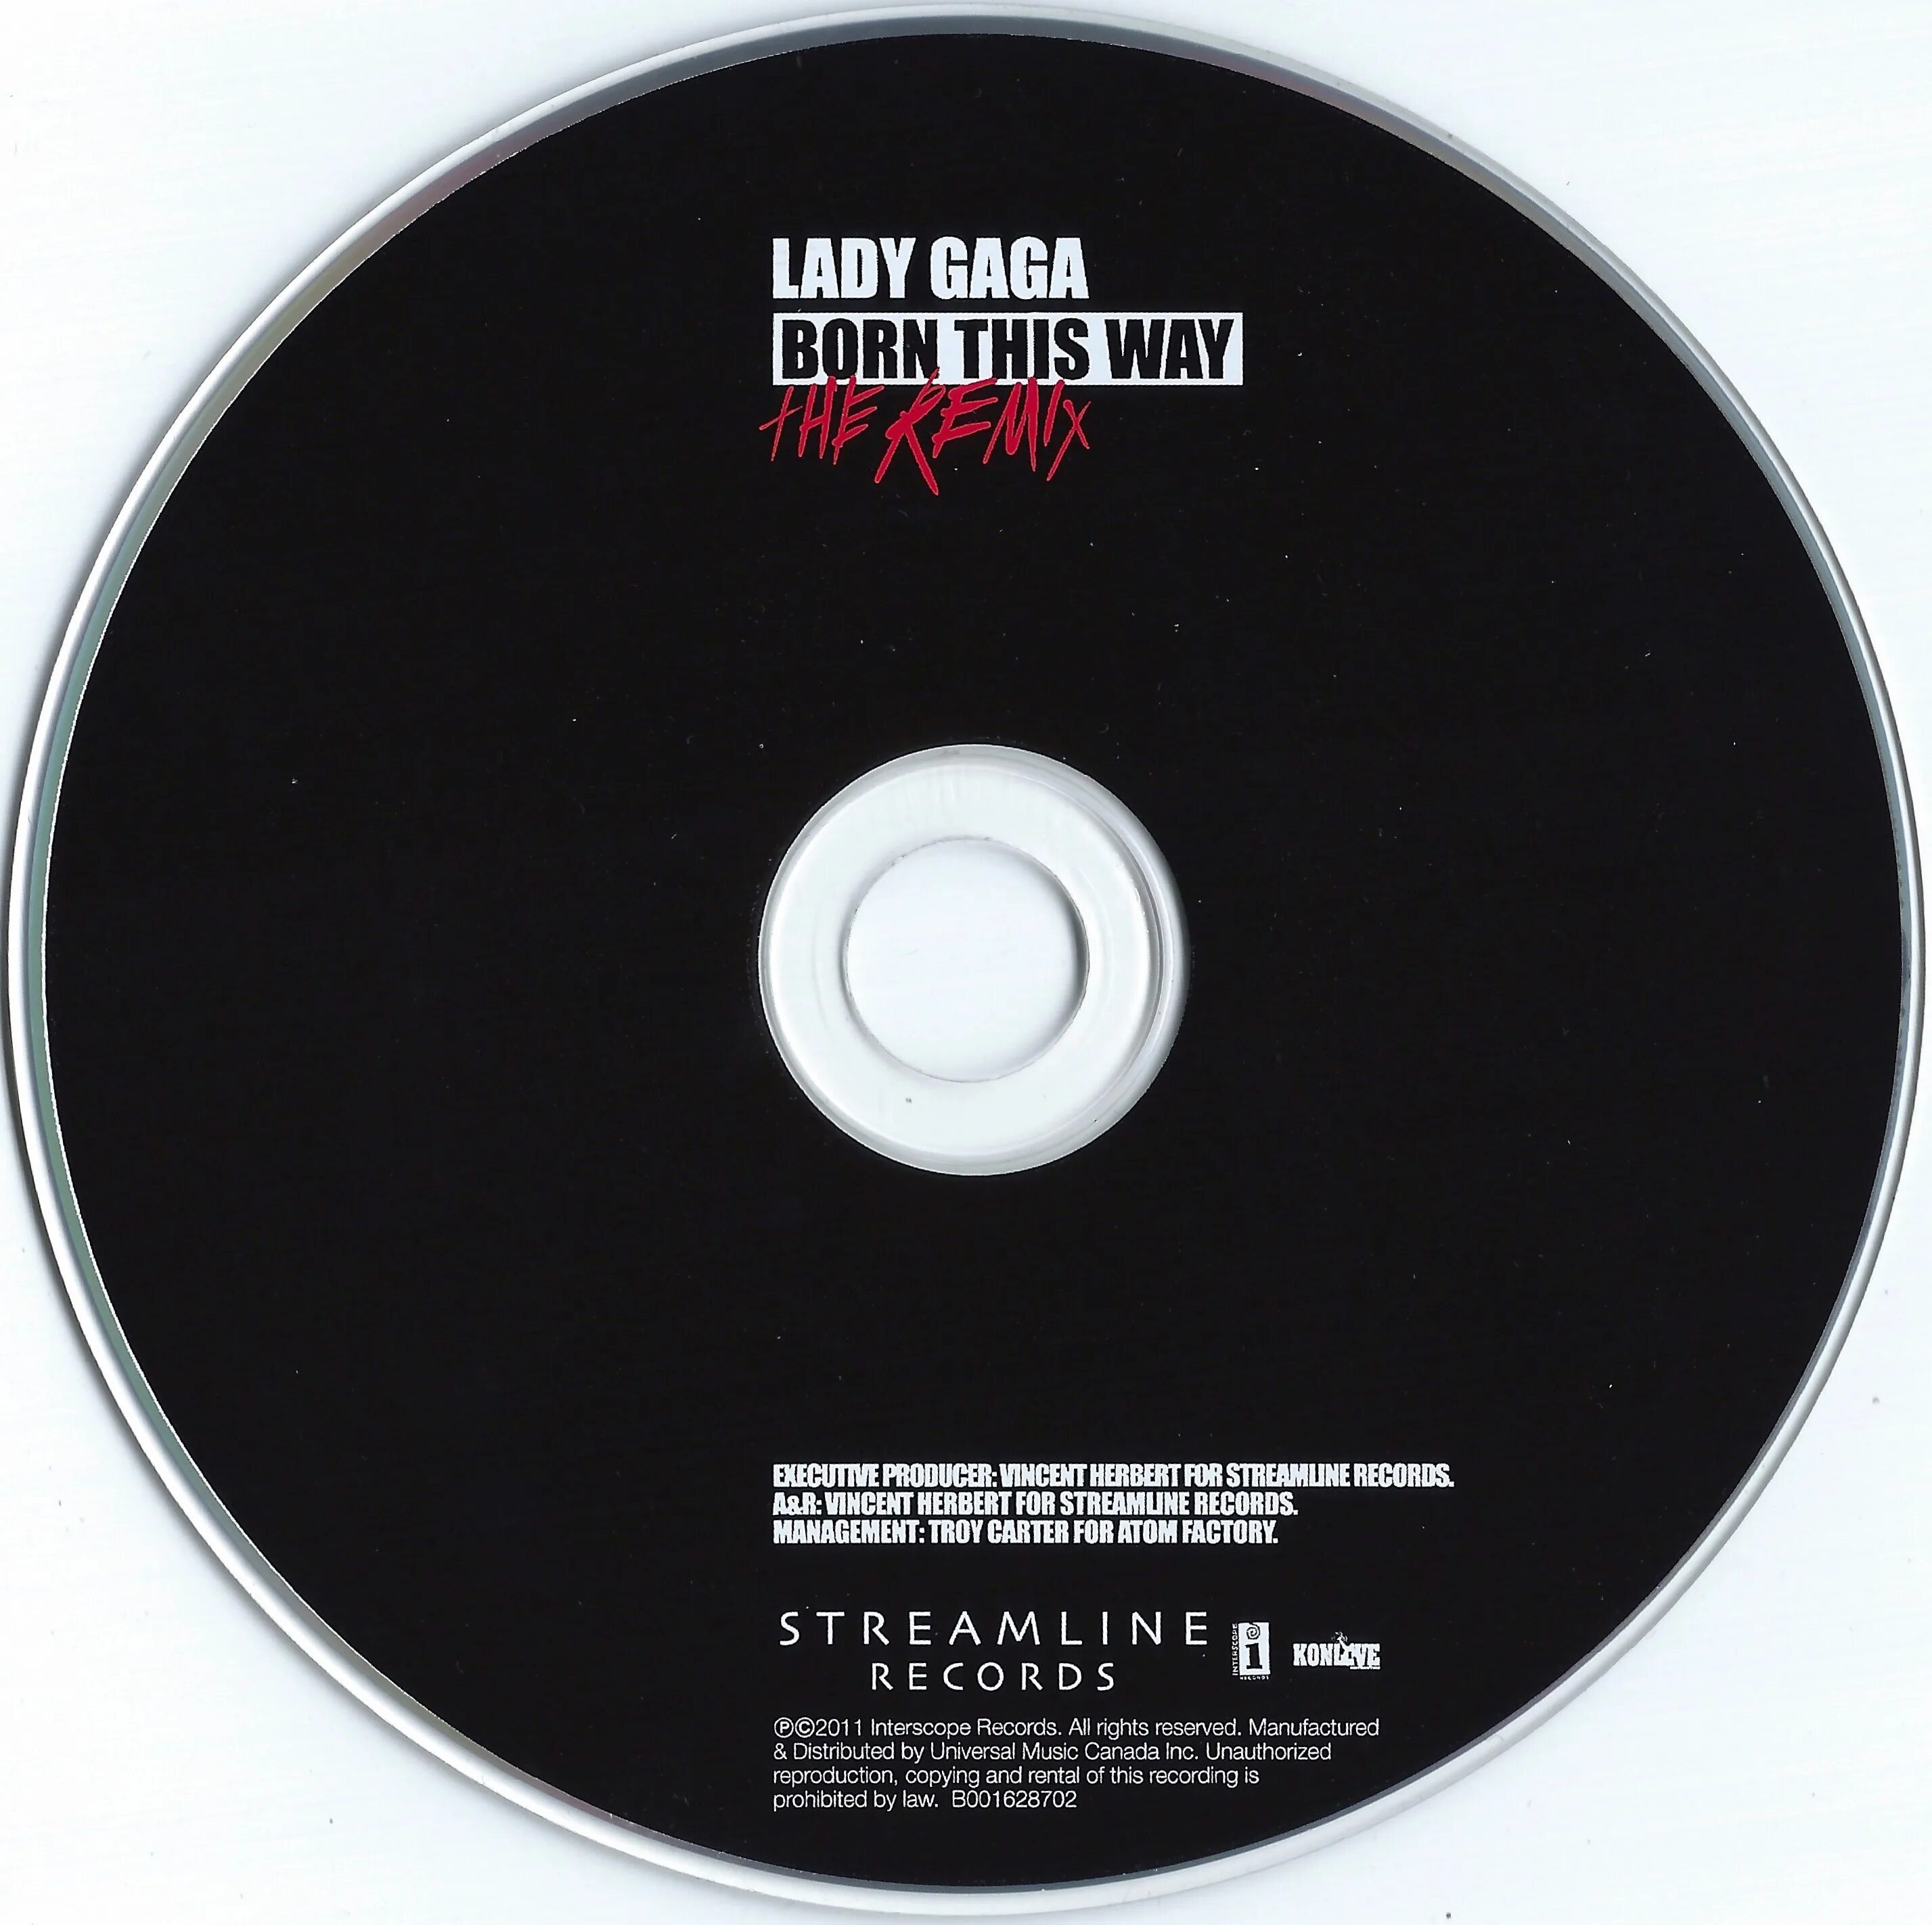 Lady Gaga born this way CD 2011 альбом Россия. 13:19 Inv is this way Remix Regg Lady Gaga 151 / 419. Lady gaga dj johnny remix always